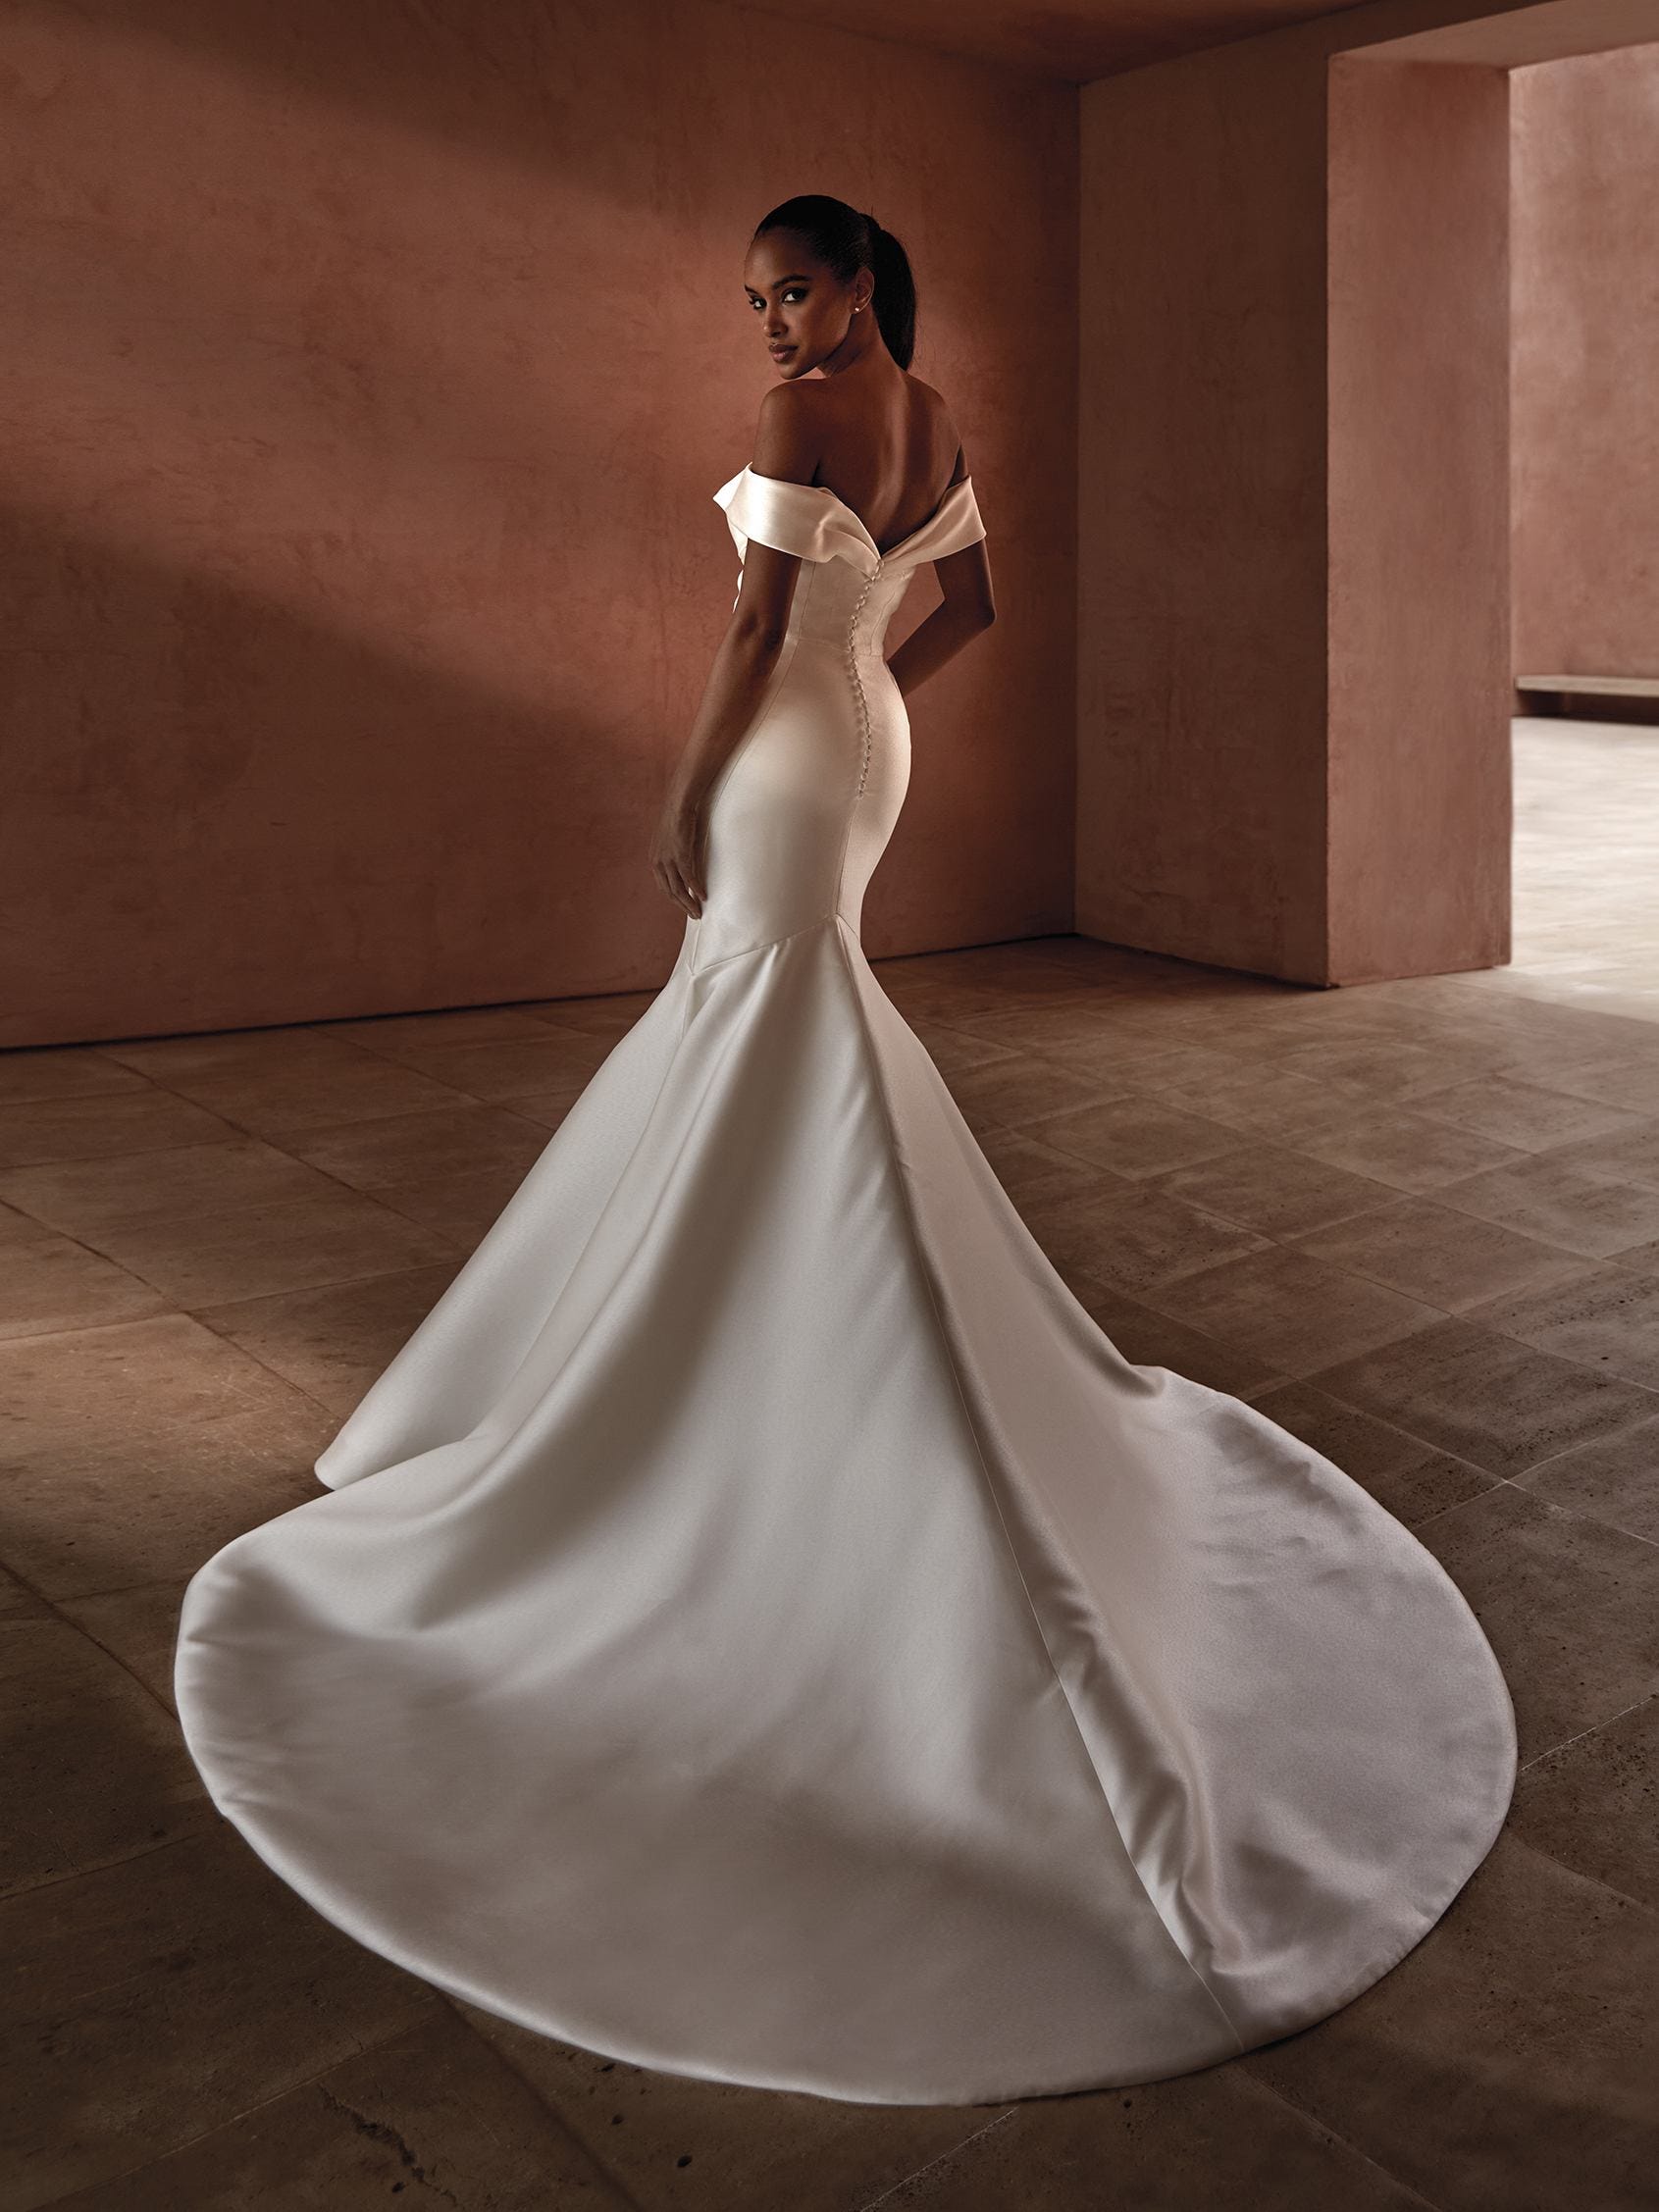 Simple Wedding Dresses: Long-Sleeve, Sheath & Chic Styles